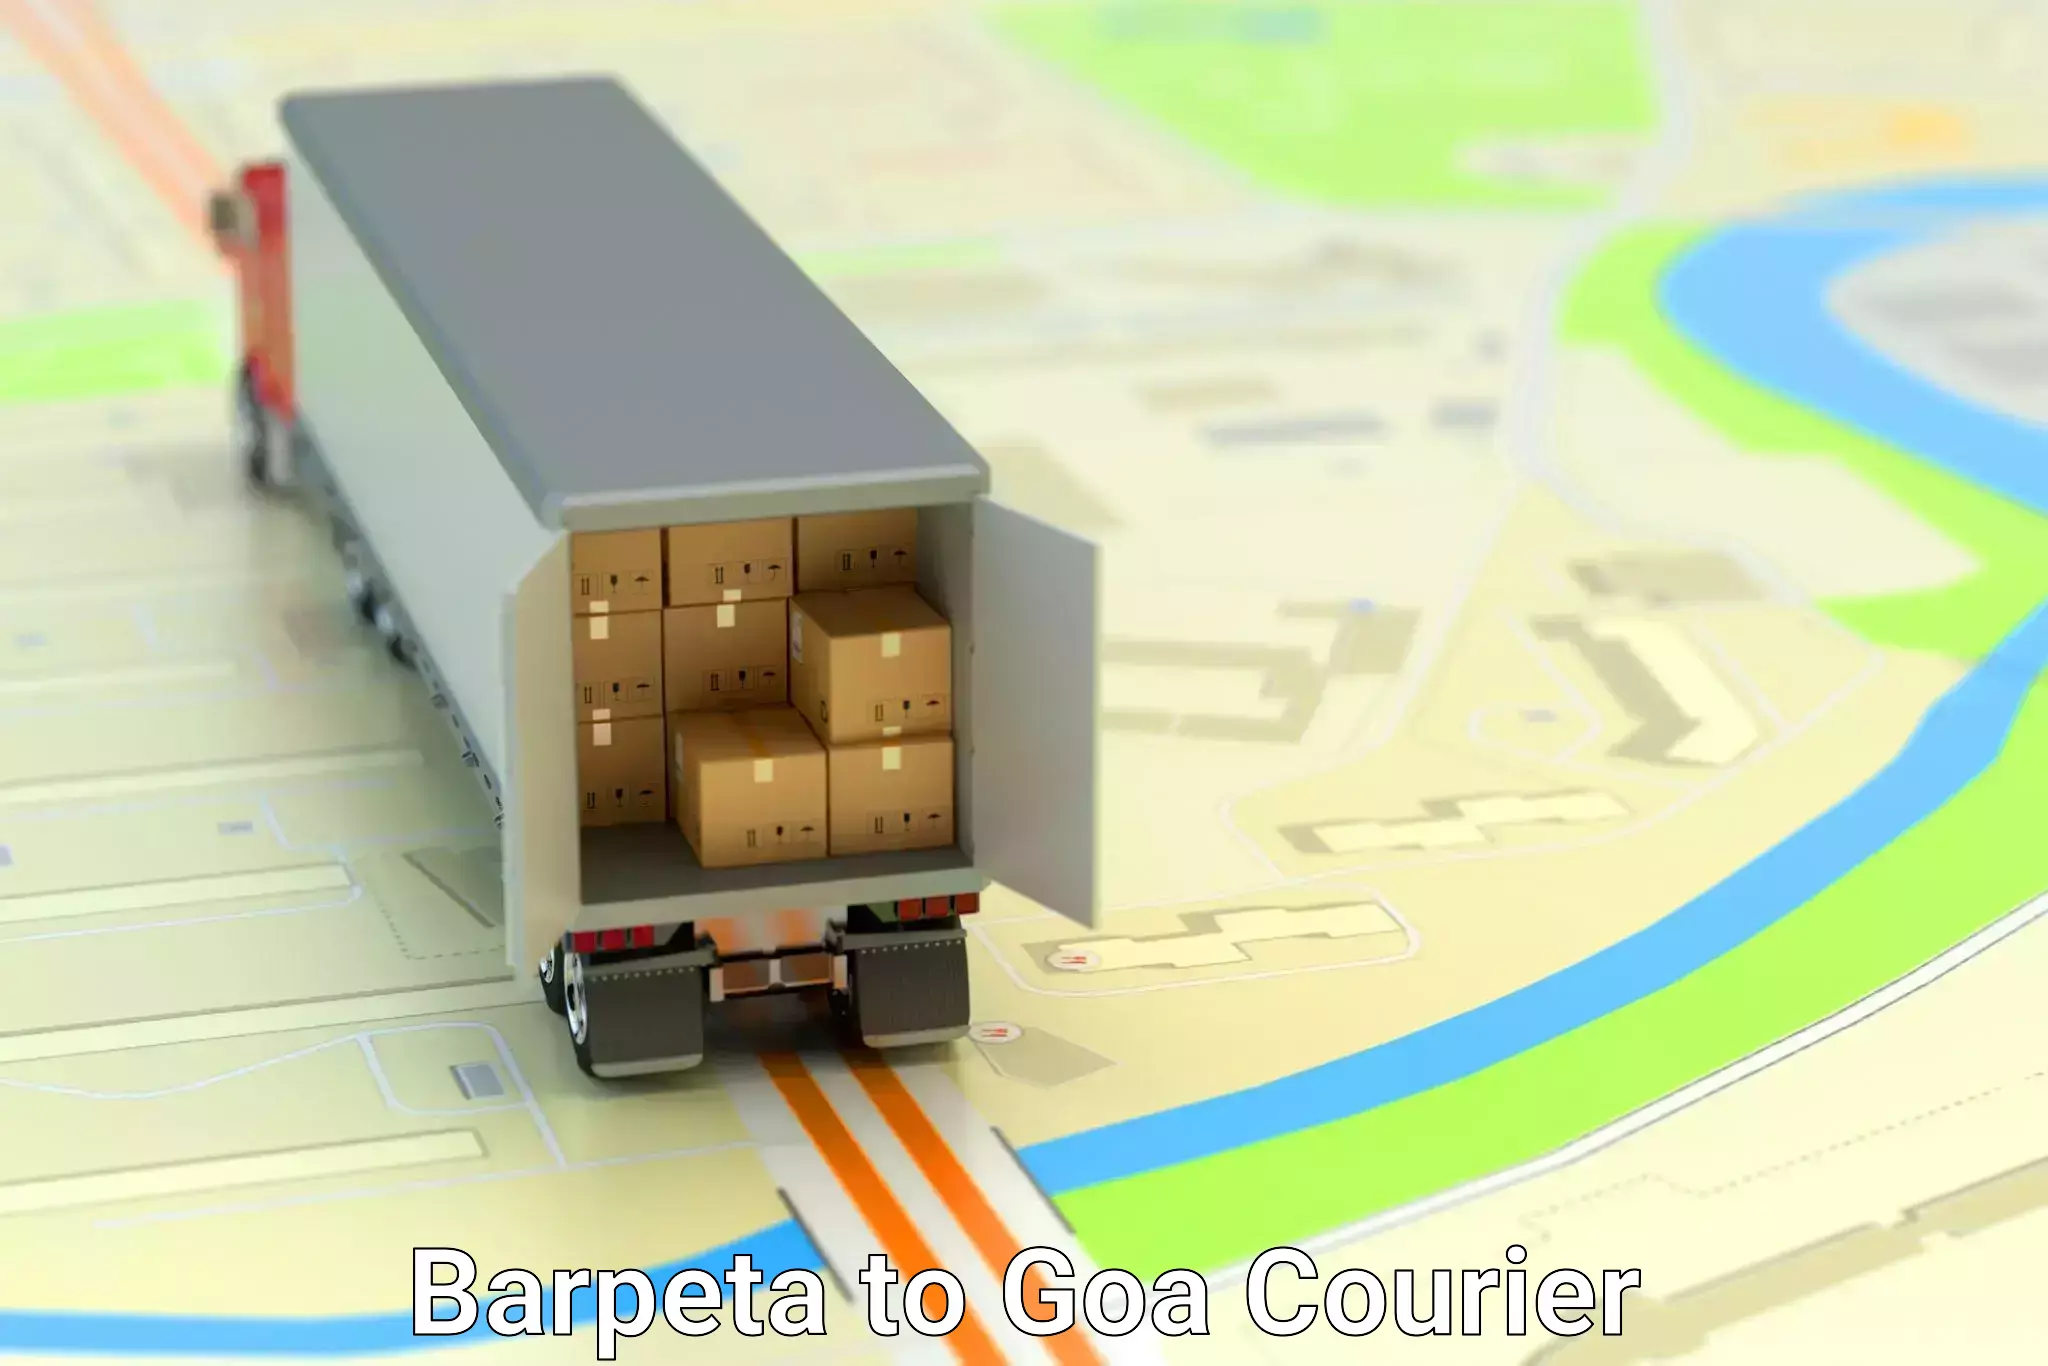 Courier service comparison Barpeta to Bardez